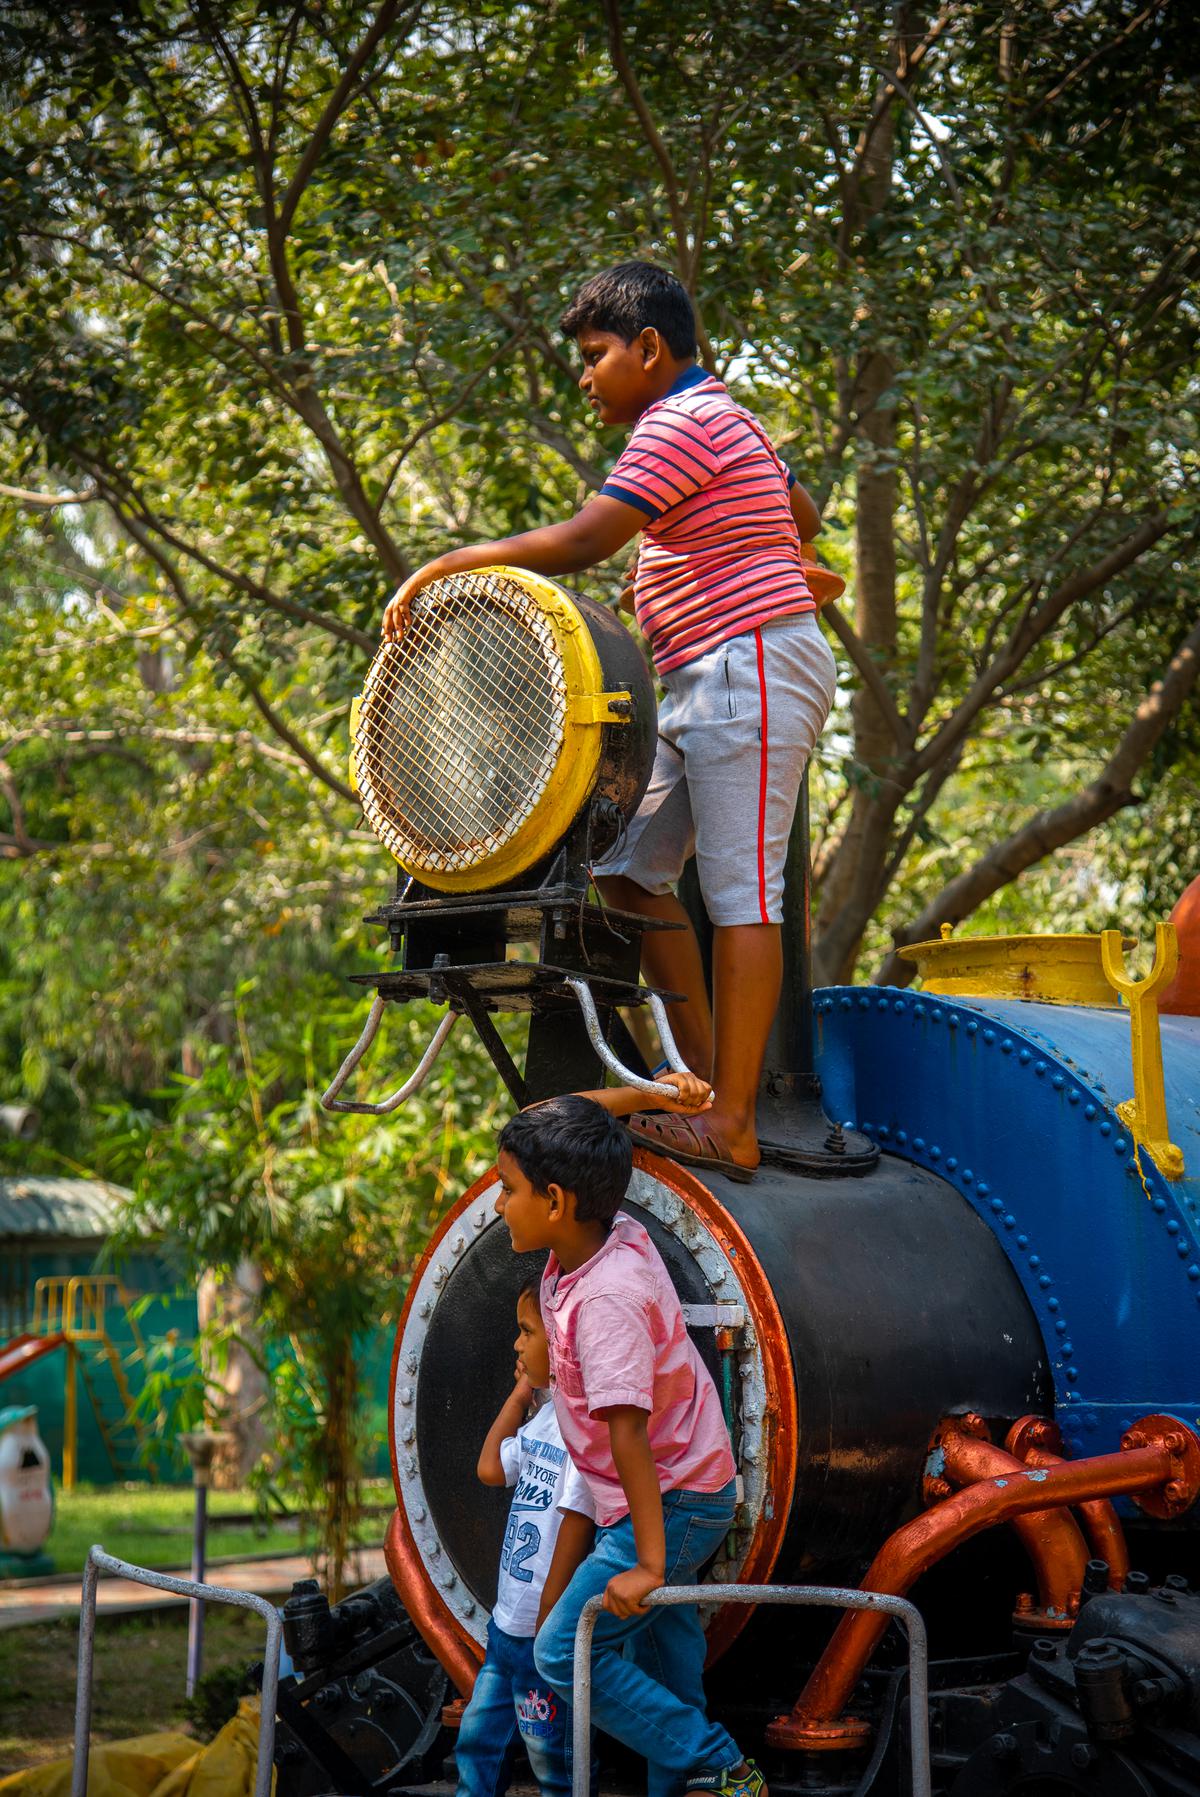 Children at Chennai Rail Museum Park